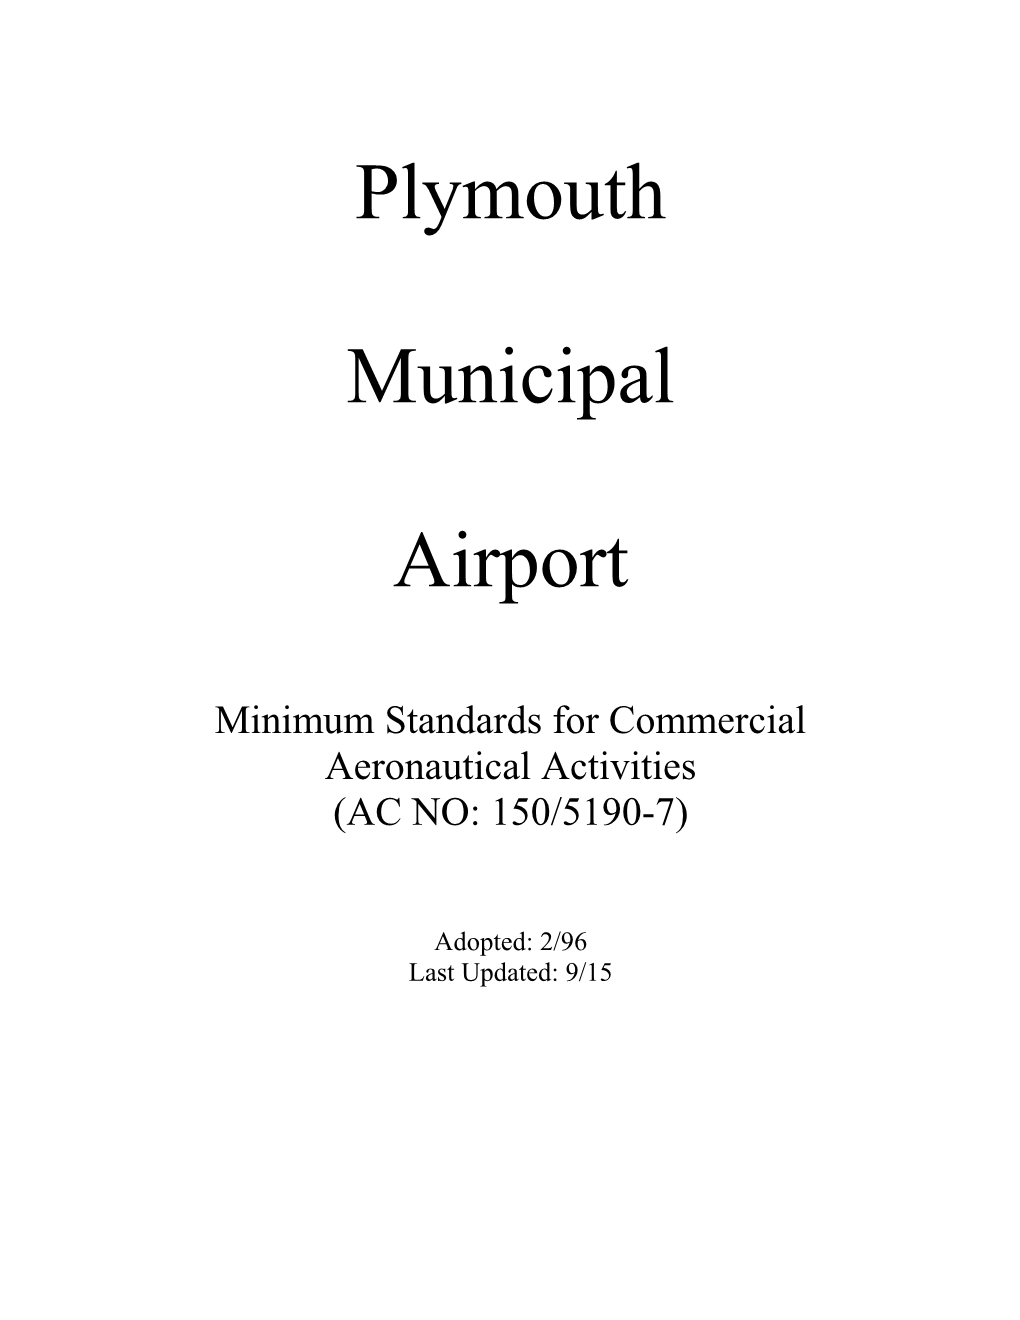 Minimum Standards for Commercial Aeronautical Activities